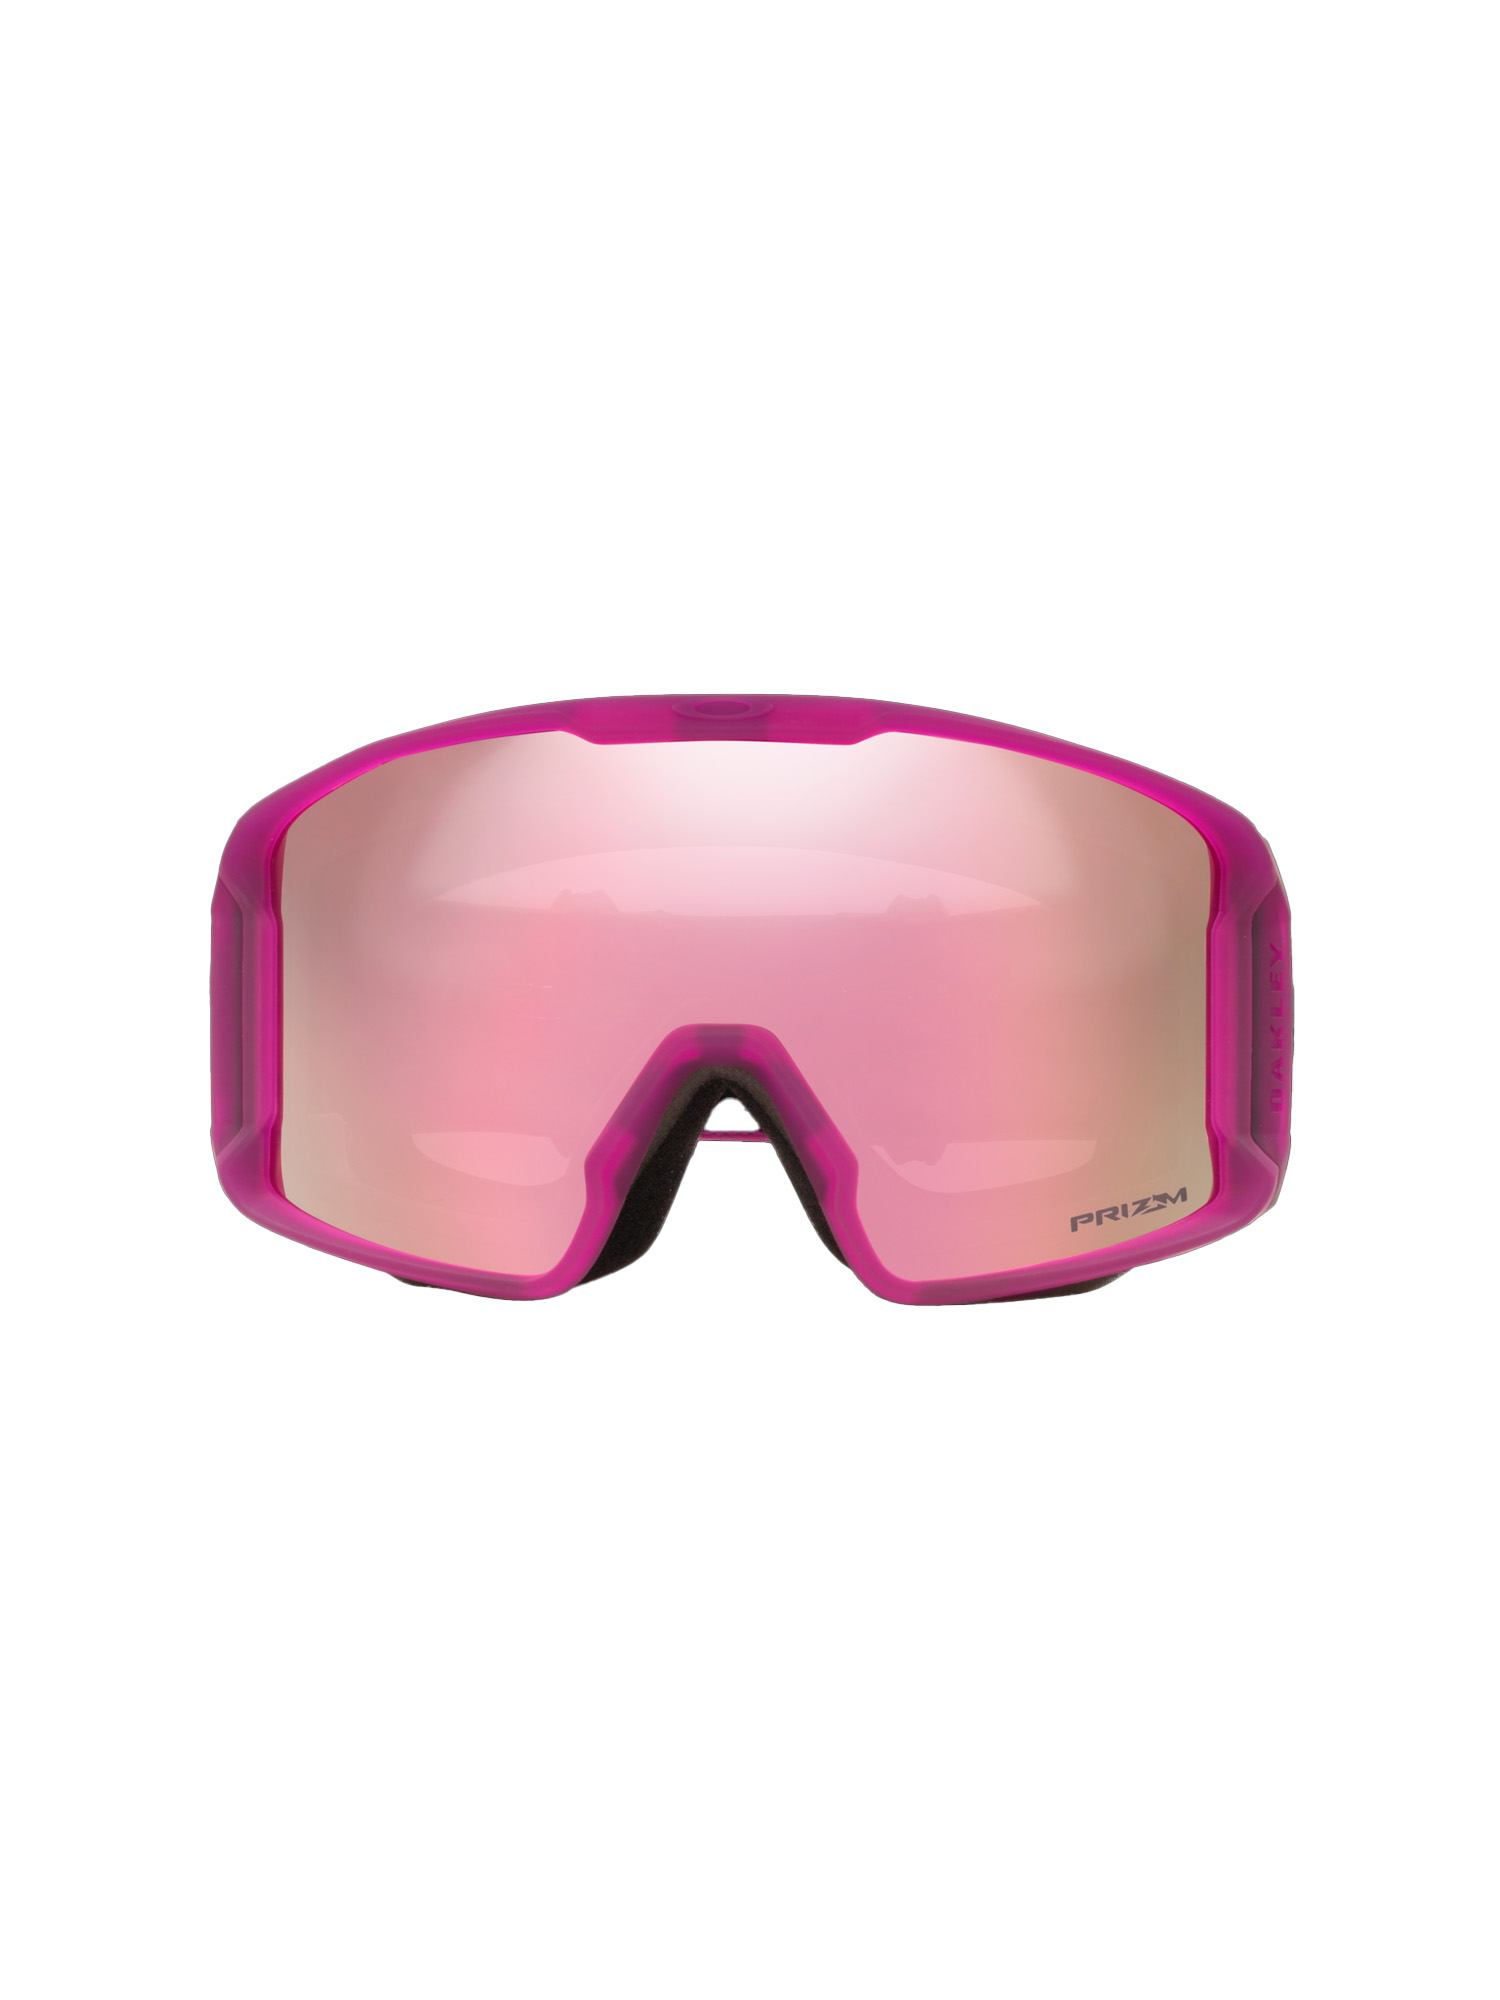 Oakley Line Miner L purple/prizm hi pink goggles - Äkäslompolo